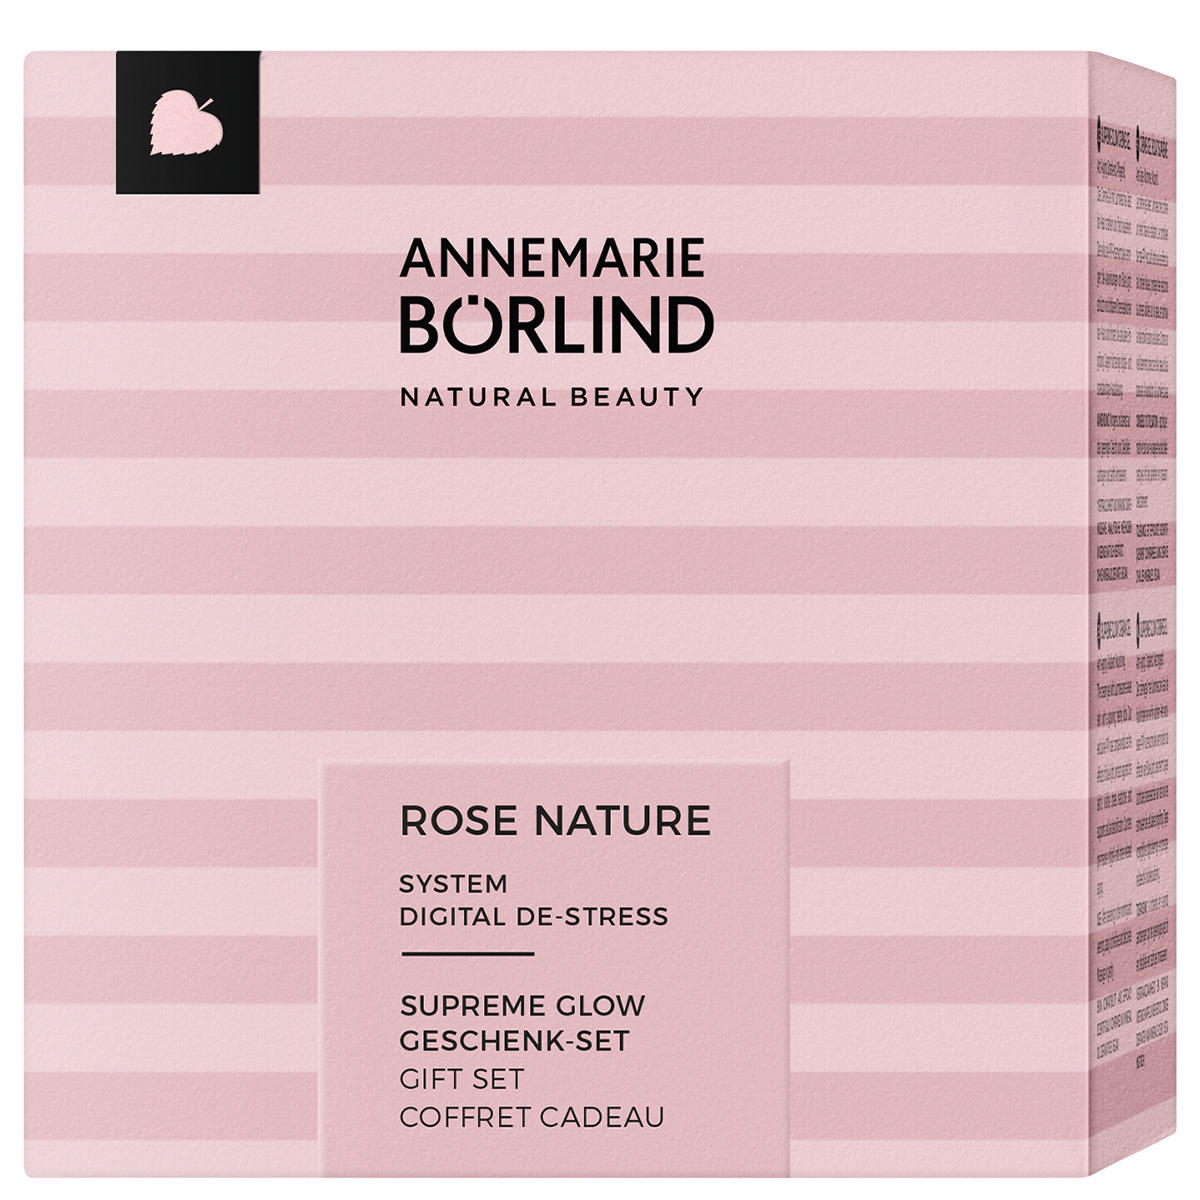 ANNEMARIE BÖRLIND ROSE NATURE SUPREME GLOW GIFT SET Limited Edition  - 1